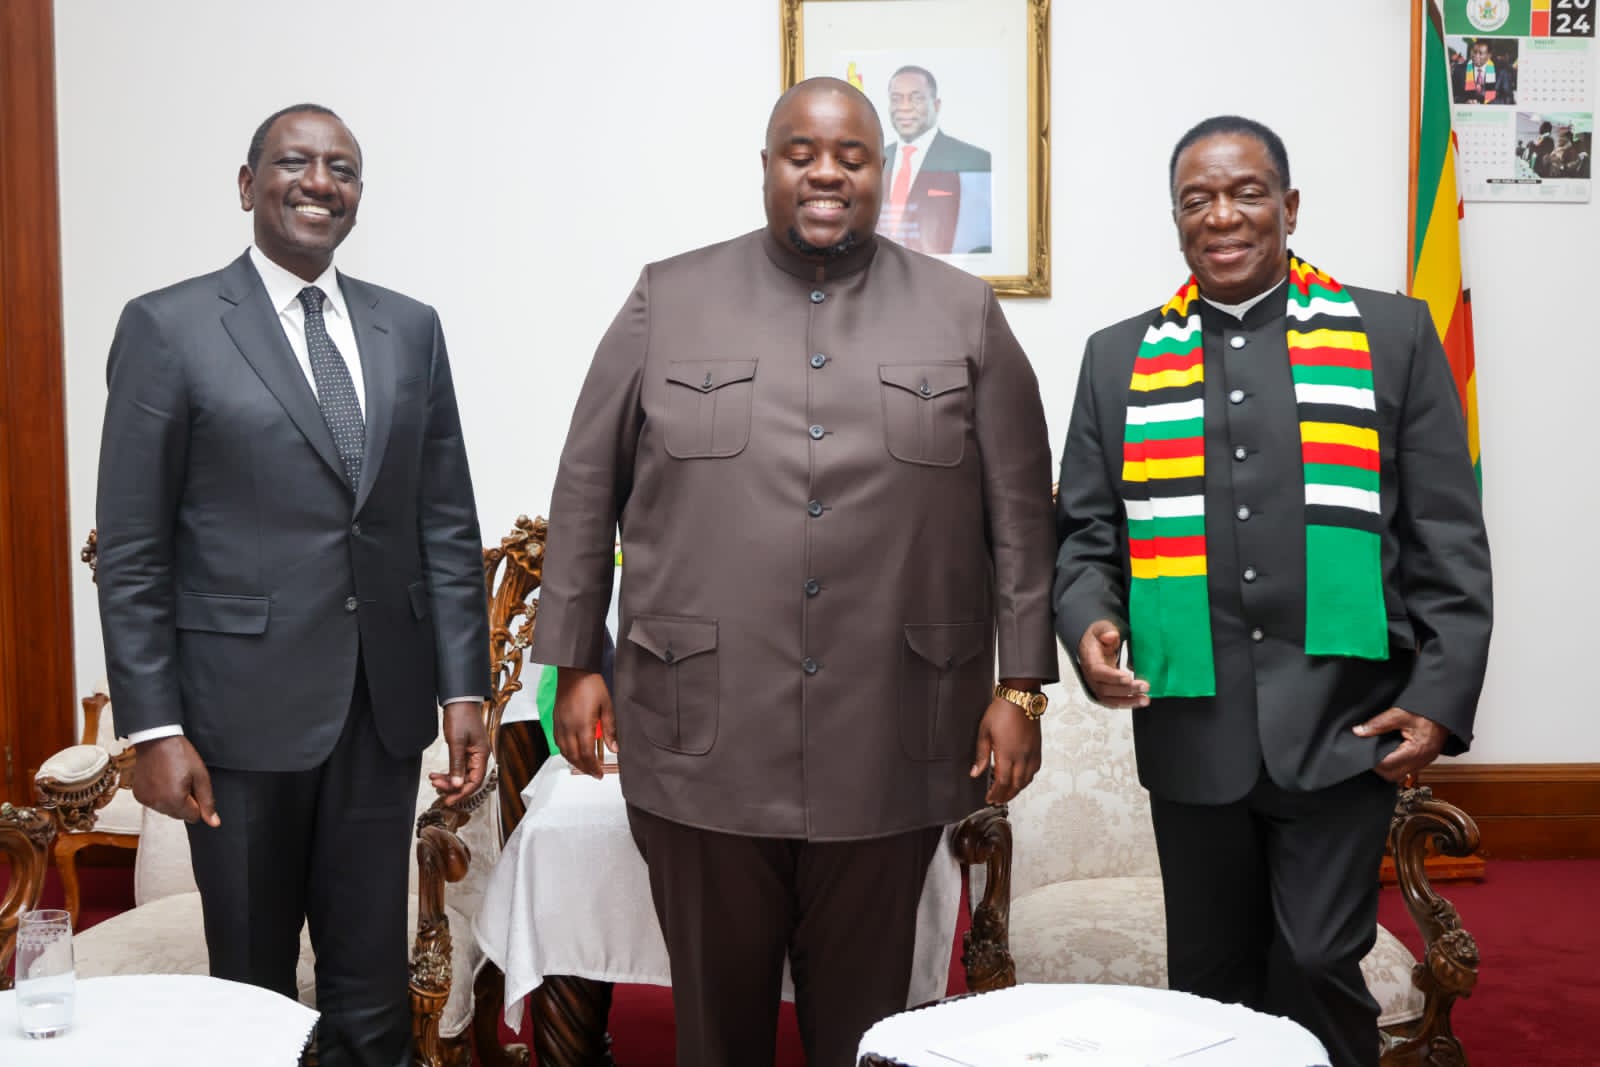 RUTO: Kenyan President’s Photo with Mnangagwa and Wicknell Chivayo Raises Concerns